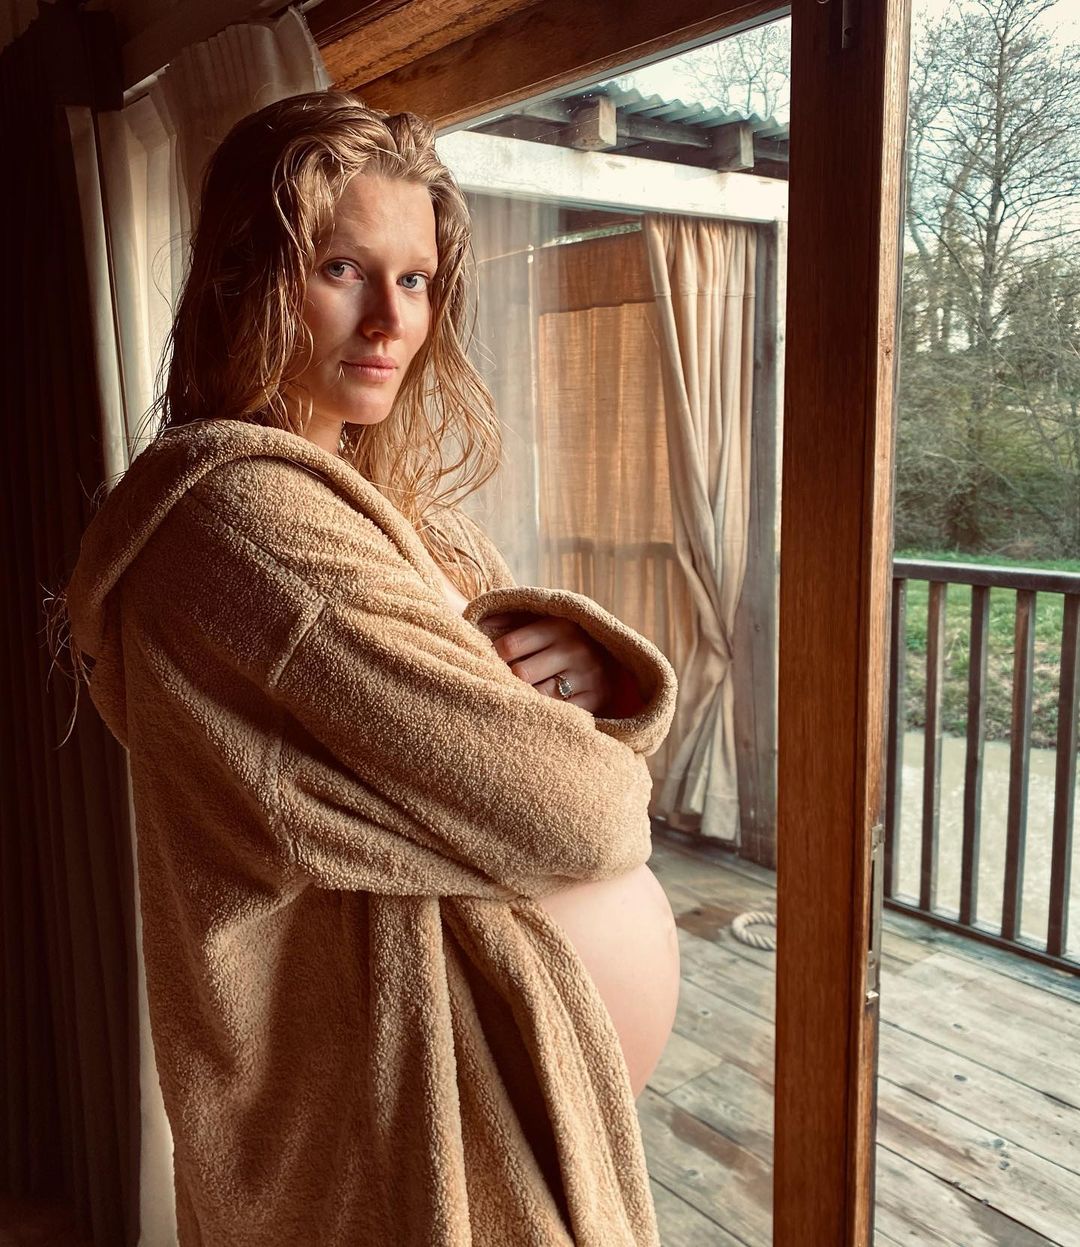 Pregnant Celeb - Celebrities Posing Nude While Pregnant: Maternity Pics